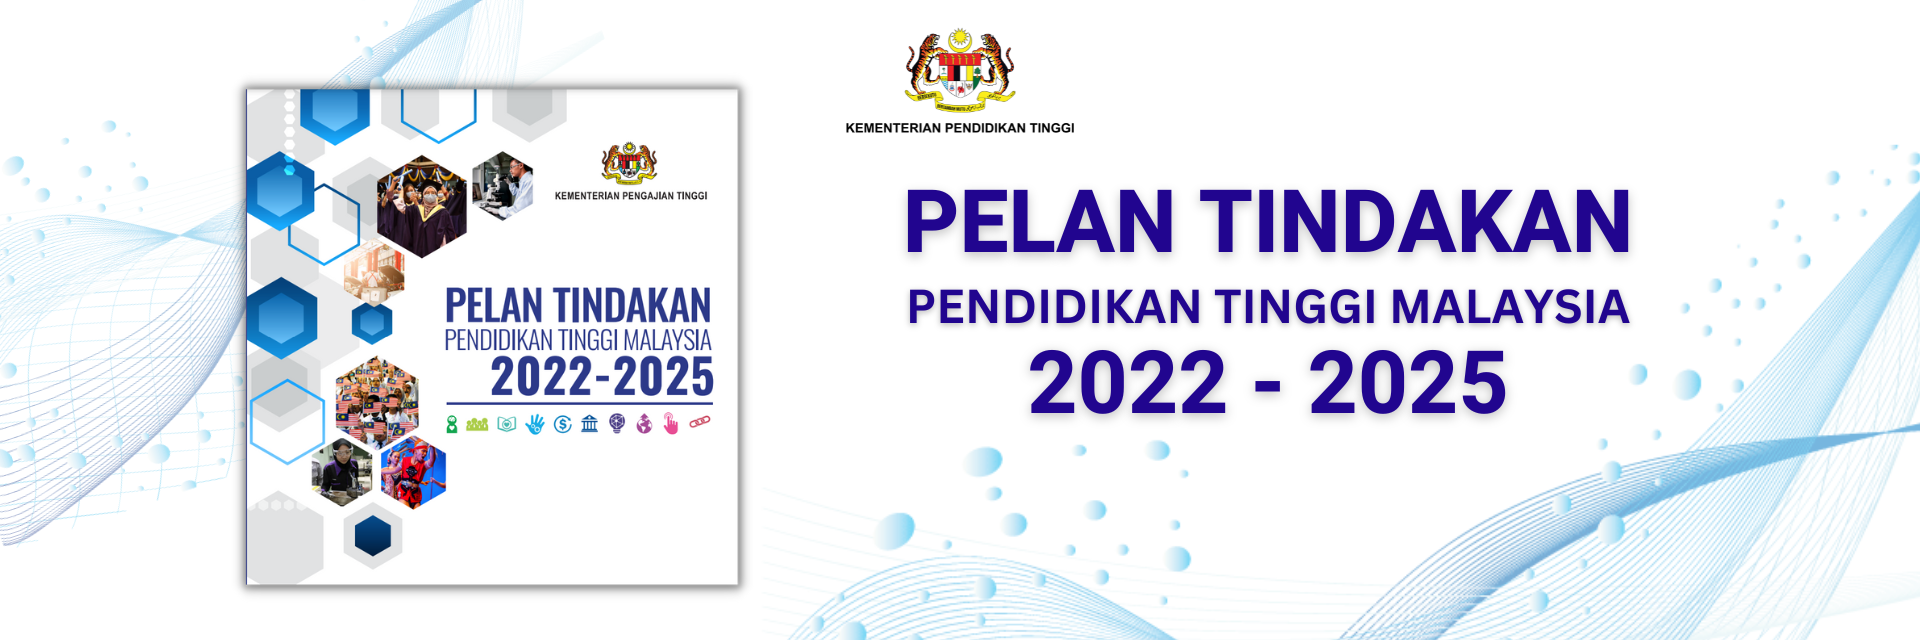 Pelan Tindakan Pendidikan Tinggi Malaysia 2022-2025